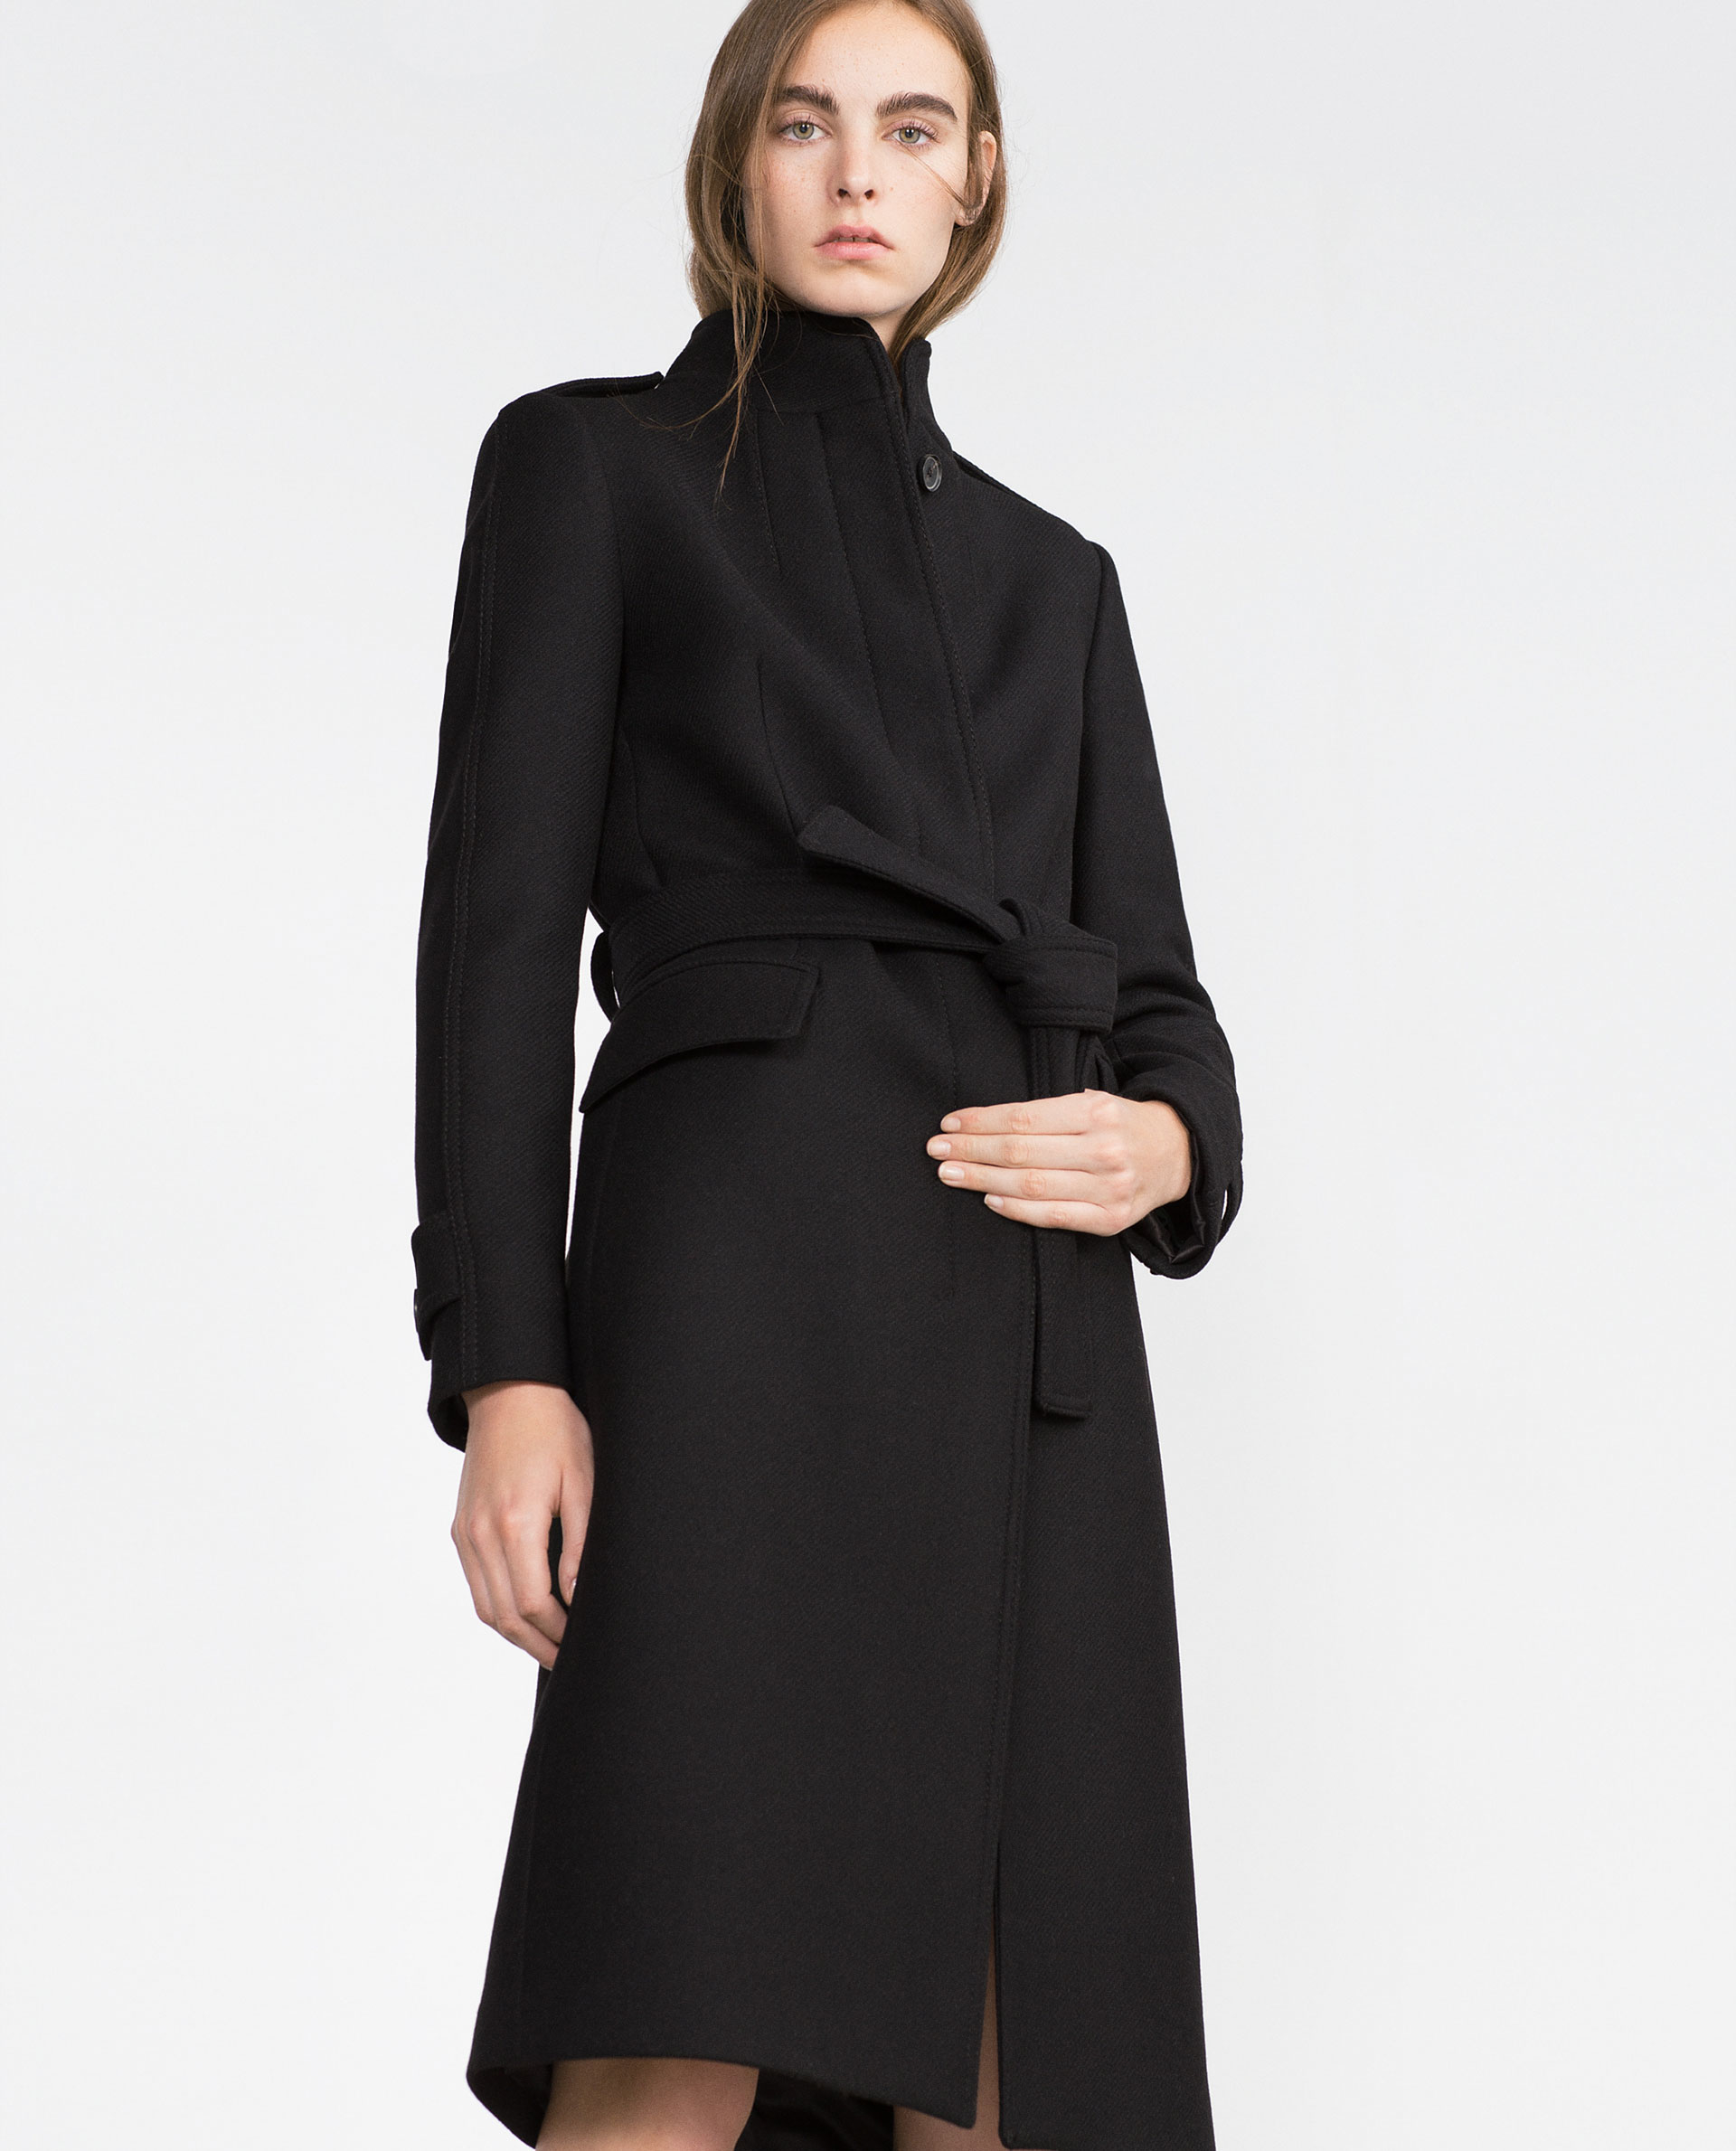 Zara High Collar Coat in Black | Lyst